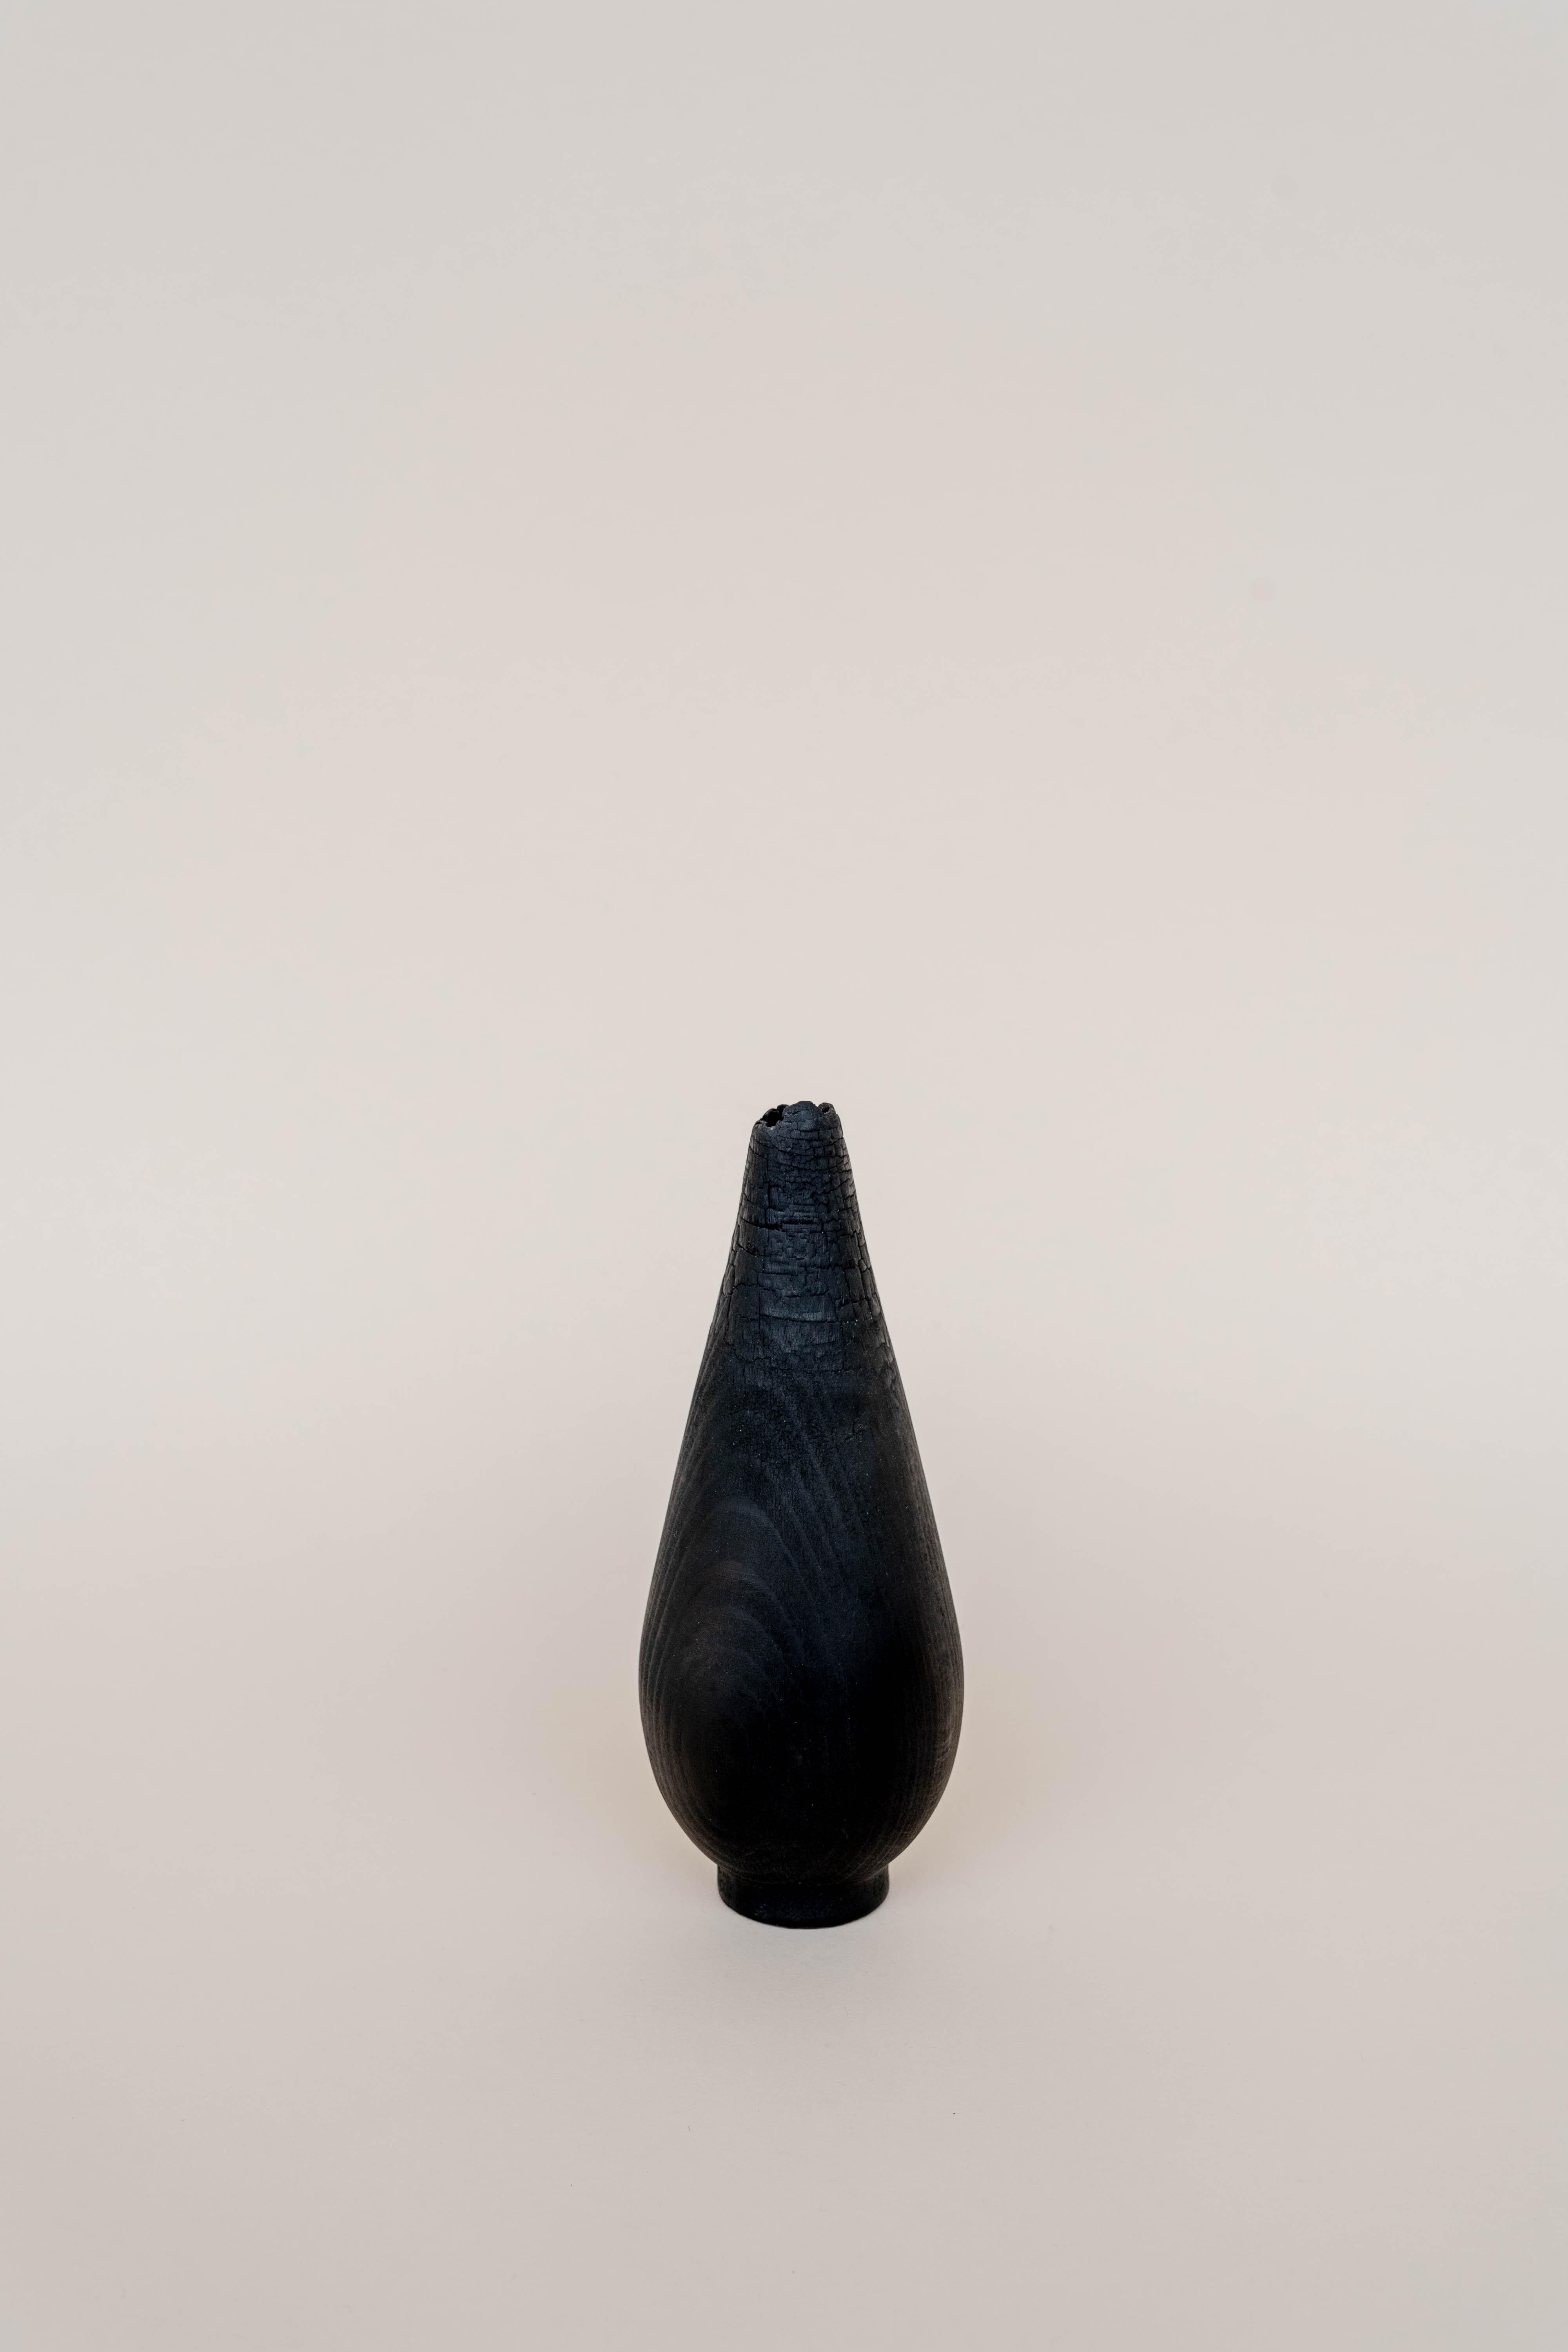 Post-Modern Small Burnt Vase by Daniel Elkayam